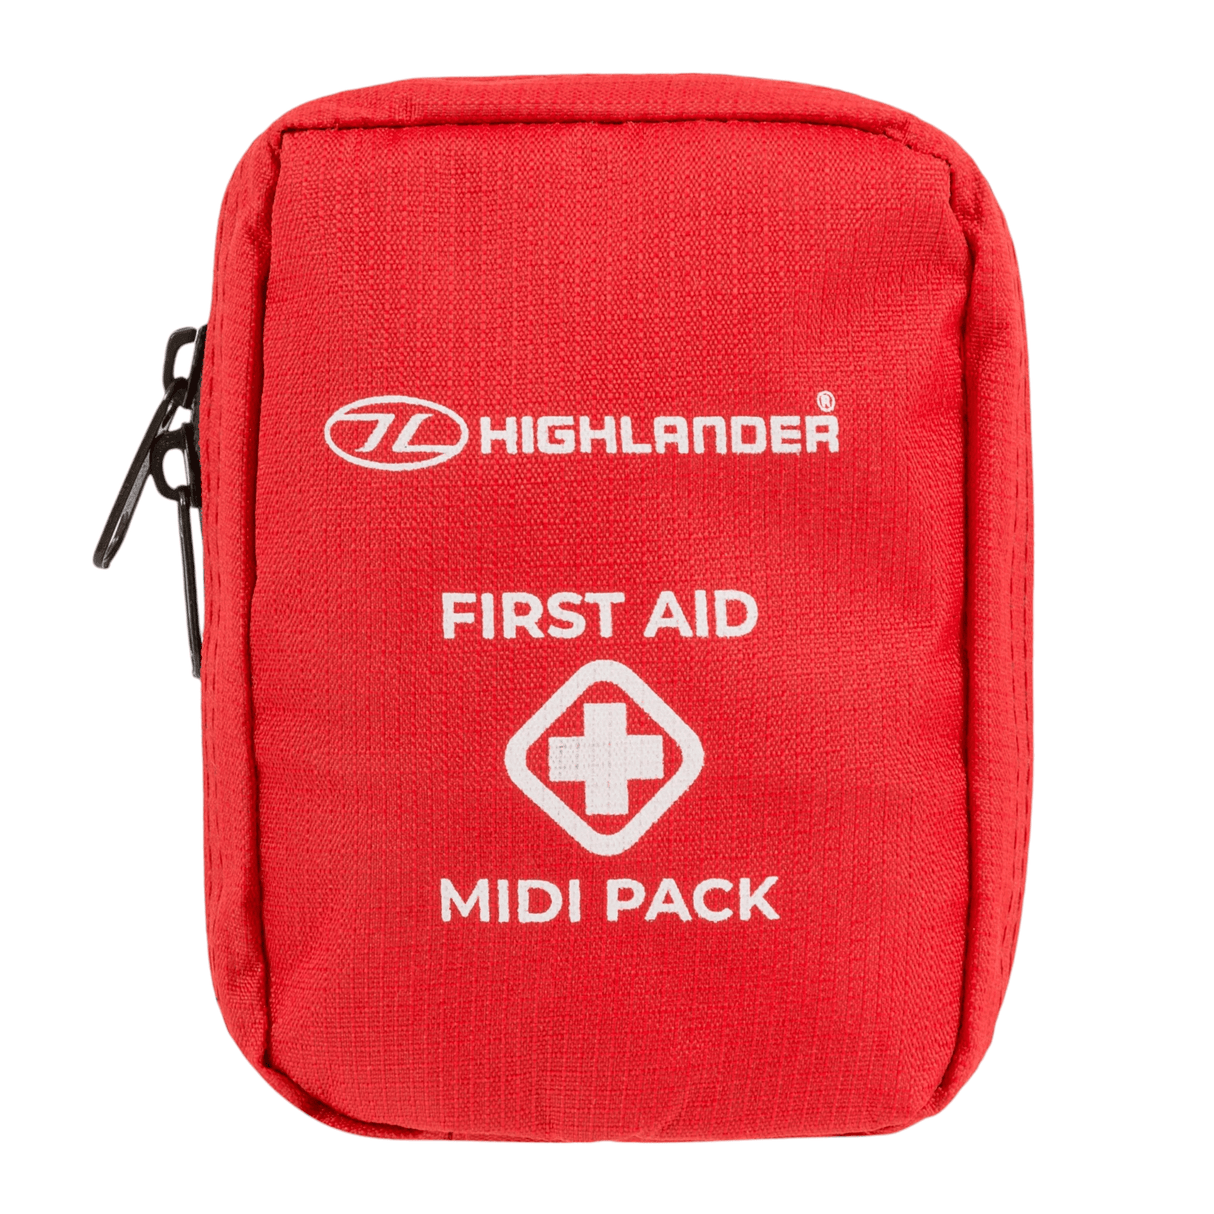 Highlander First Aid Midi Pack